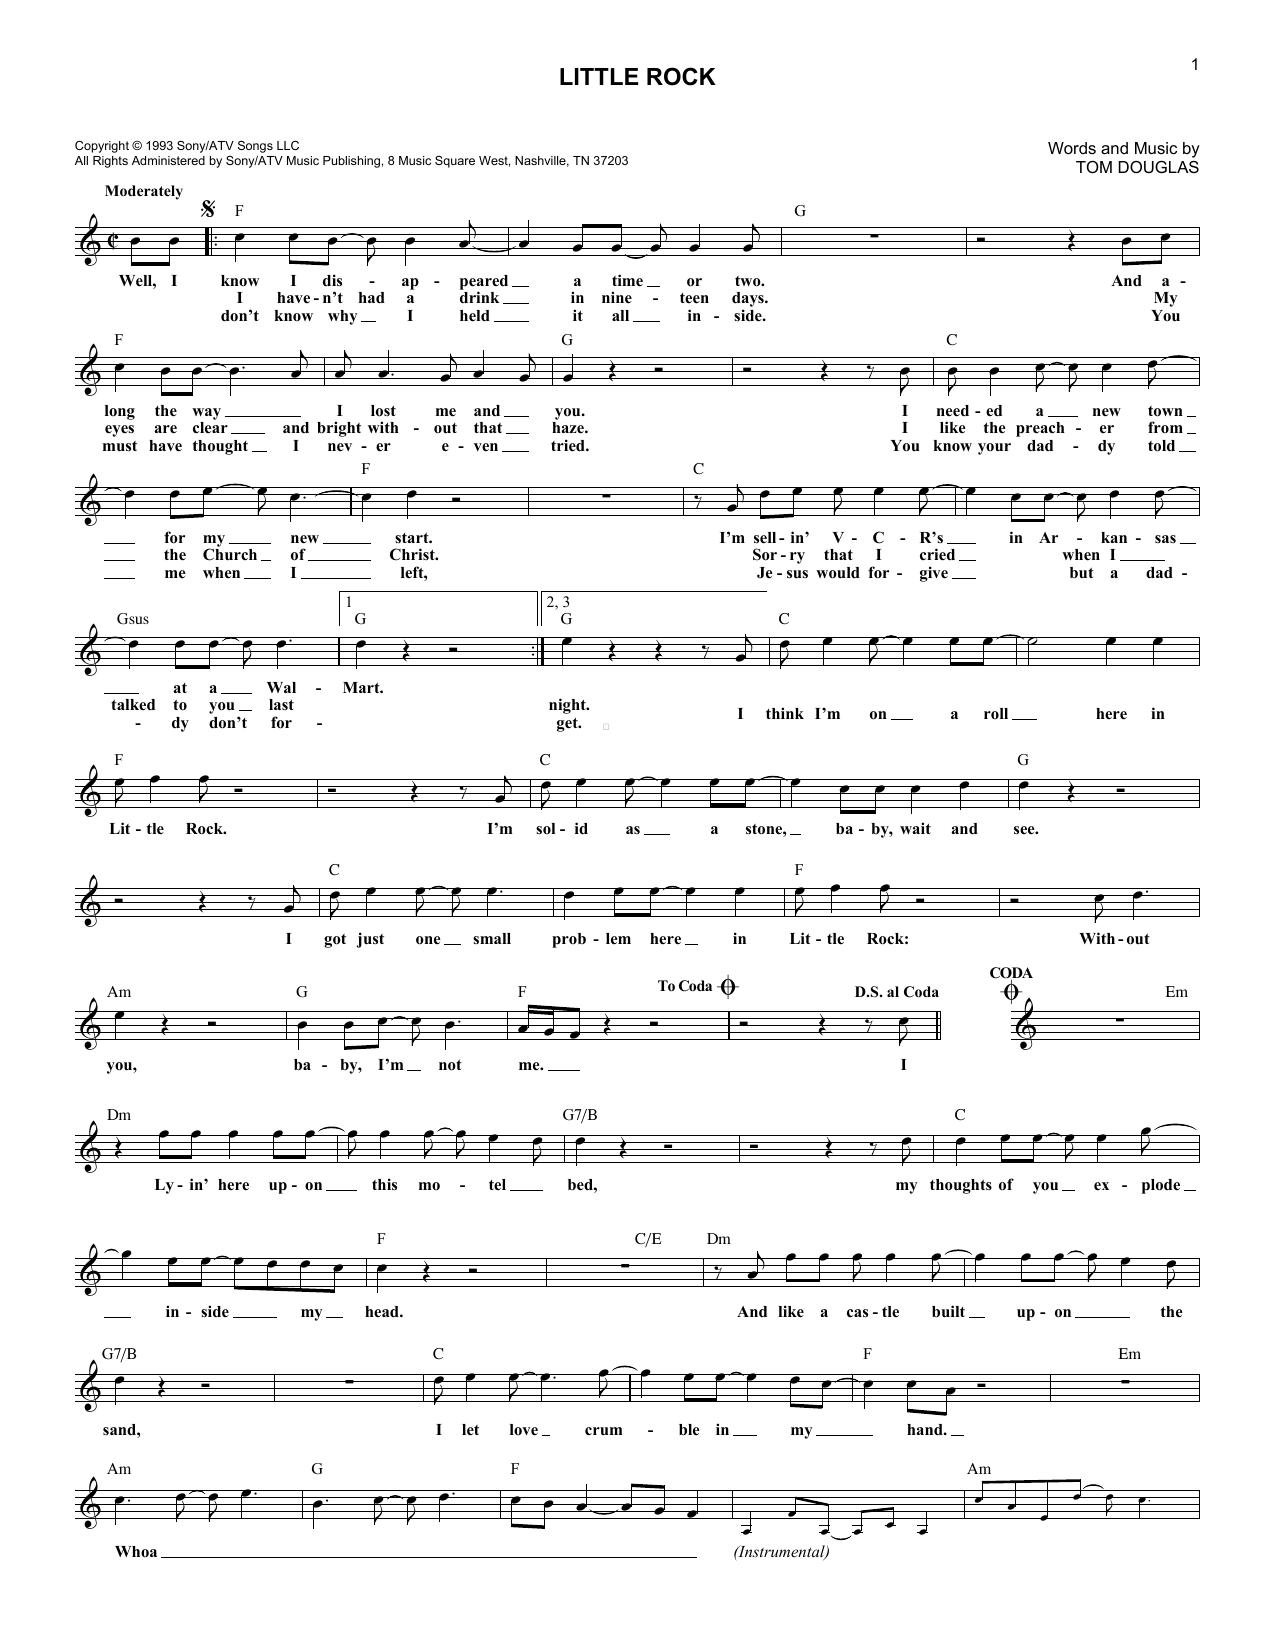 Collin Raye "Little Rock" Sheet Music PDF Notes, Chords